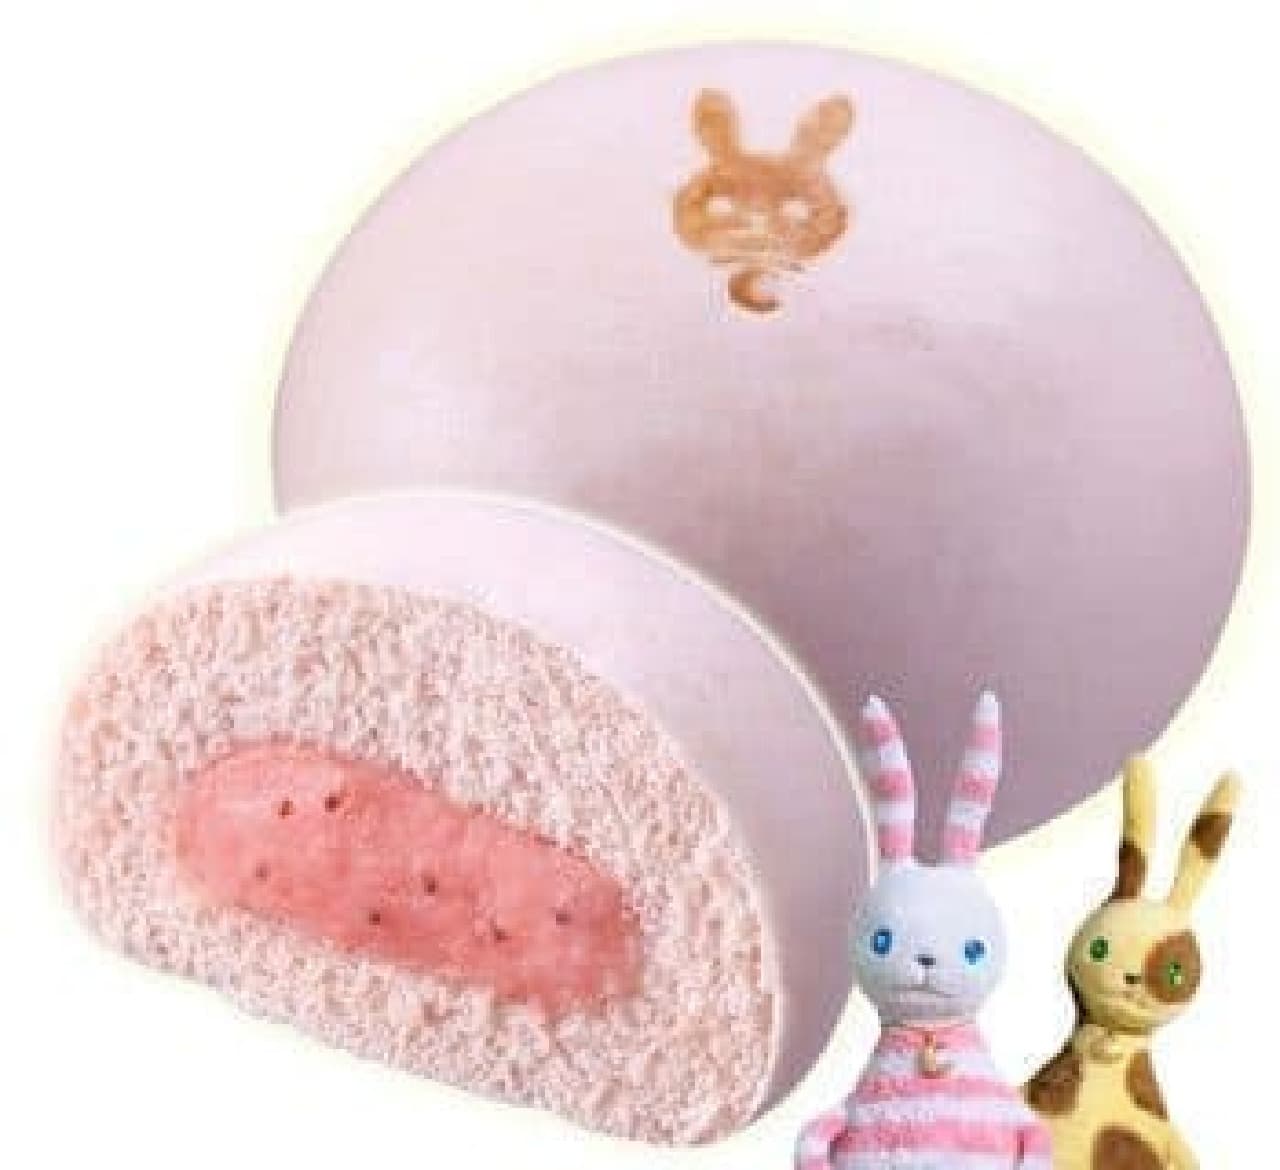 It looks cute! "Strawberry milk bun"